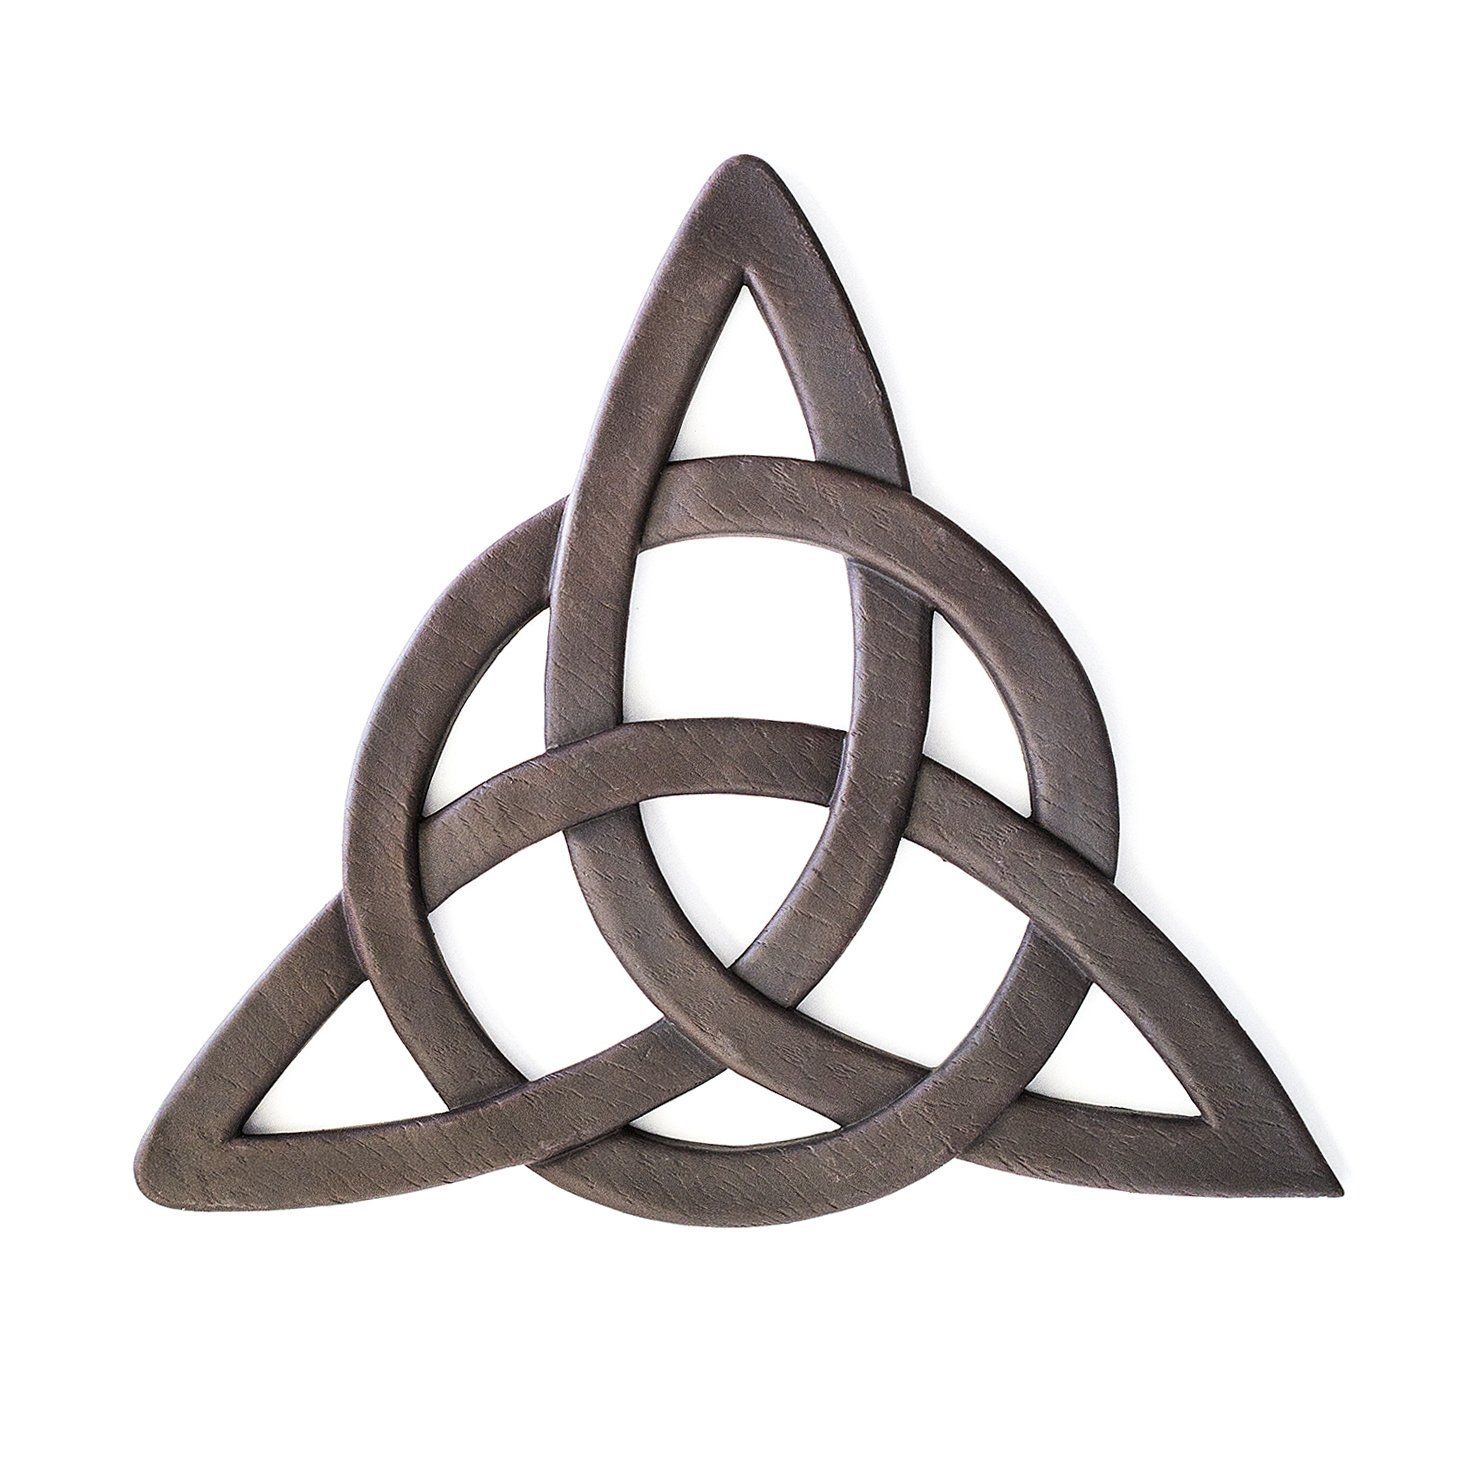 Три круга что означает. Трикветр (Триквестр или Трикветра). Триглав трикветр. Кельтский трикветр символ. Кельтский узел трикветр.